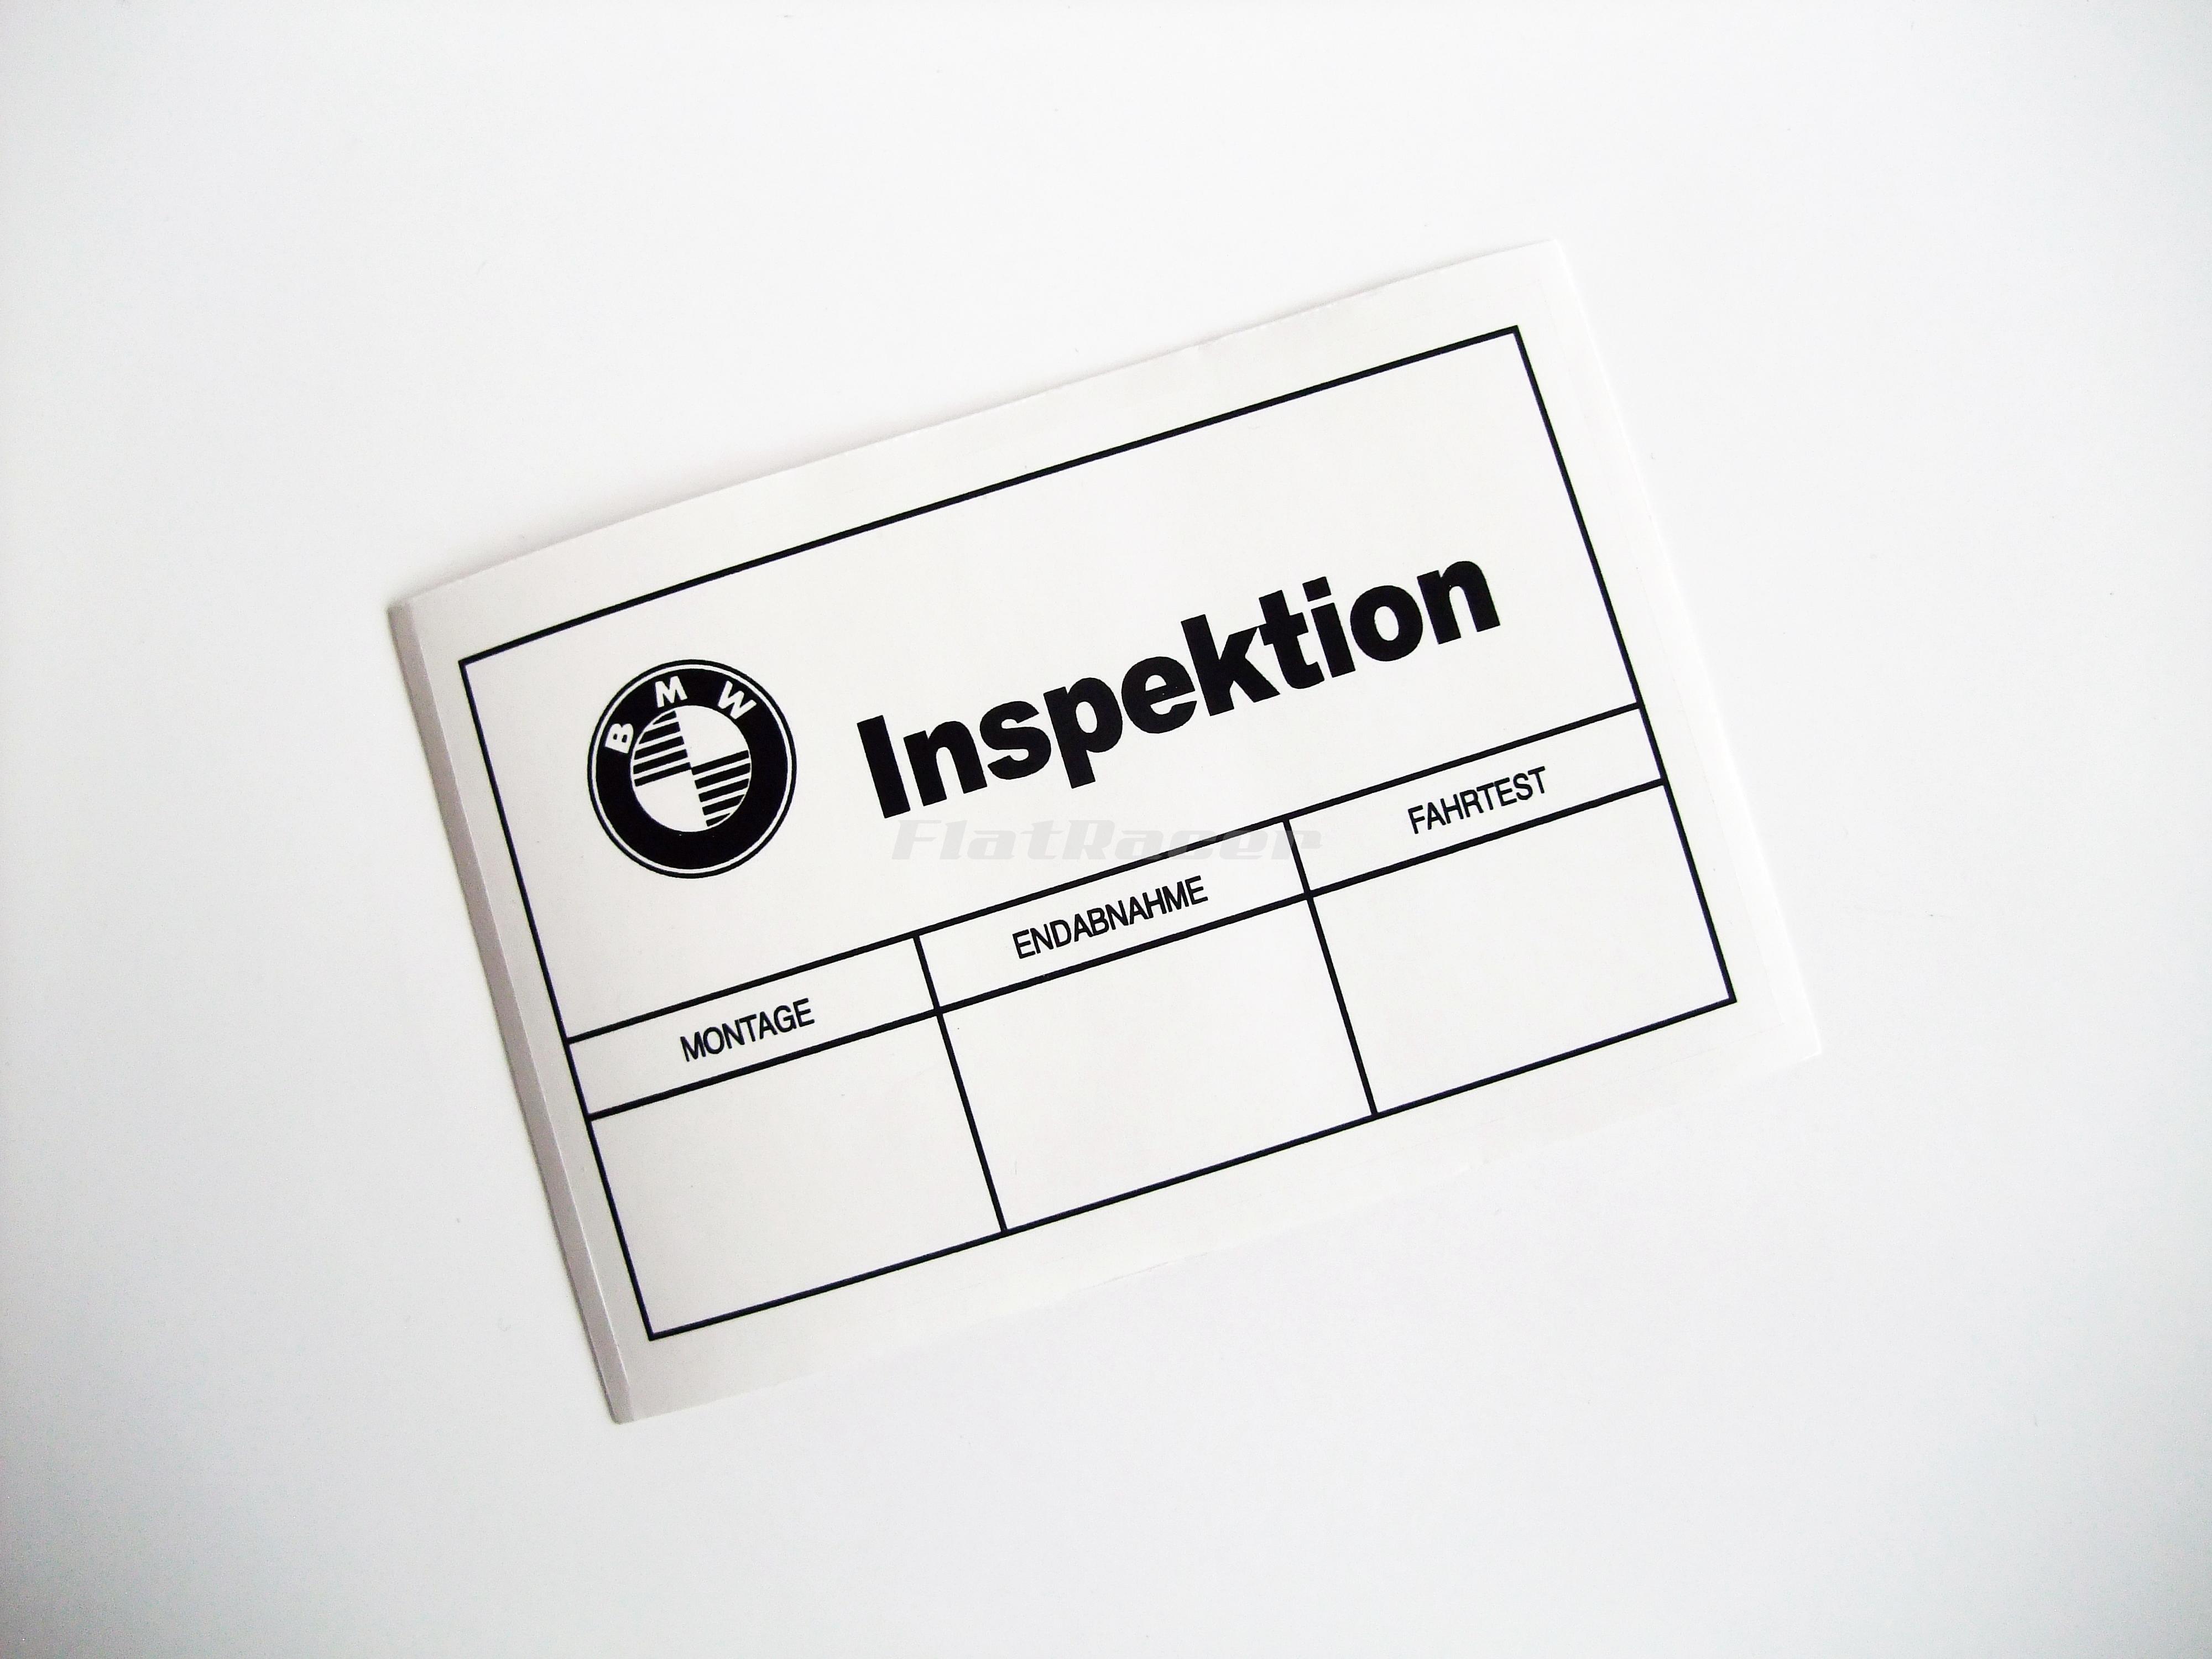 BMW Inspektion white label